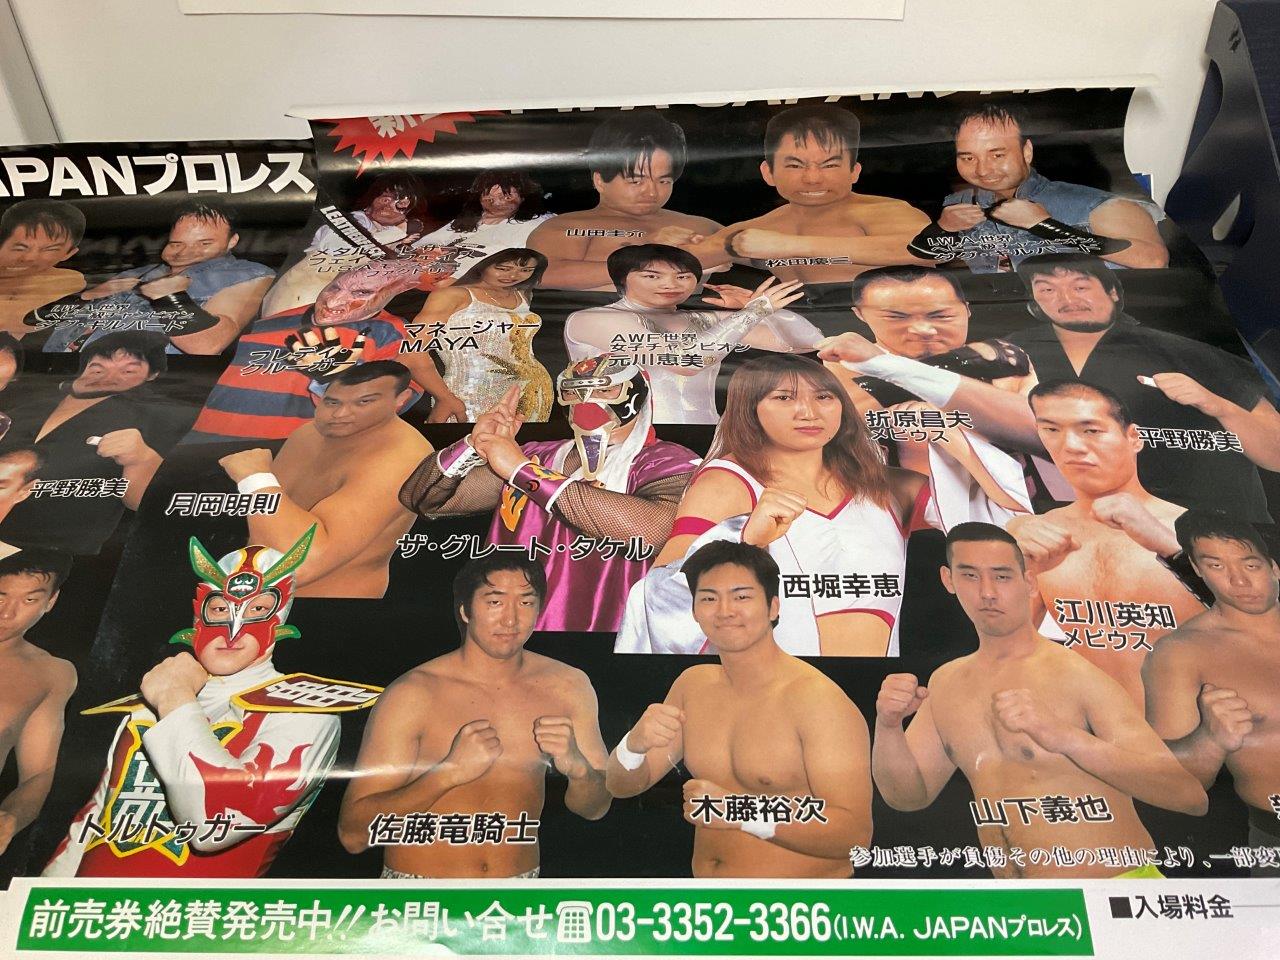 IWA JAPAN1999年2月11日小田原アリーナポスター2